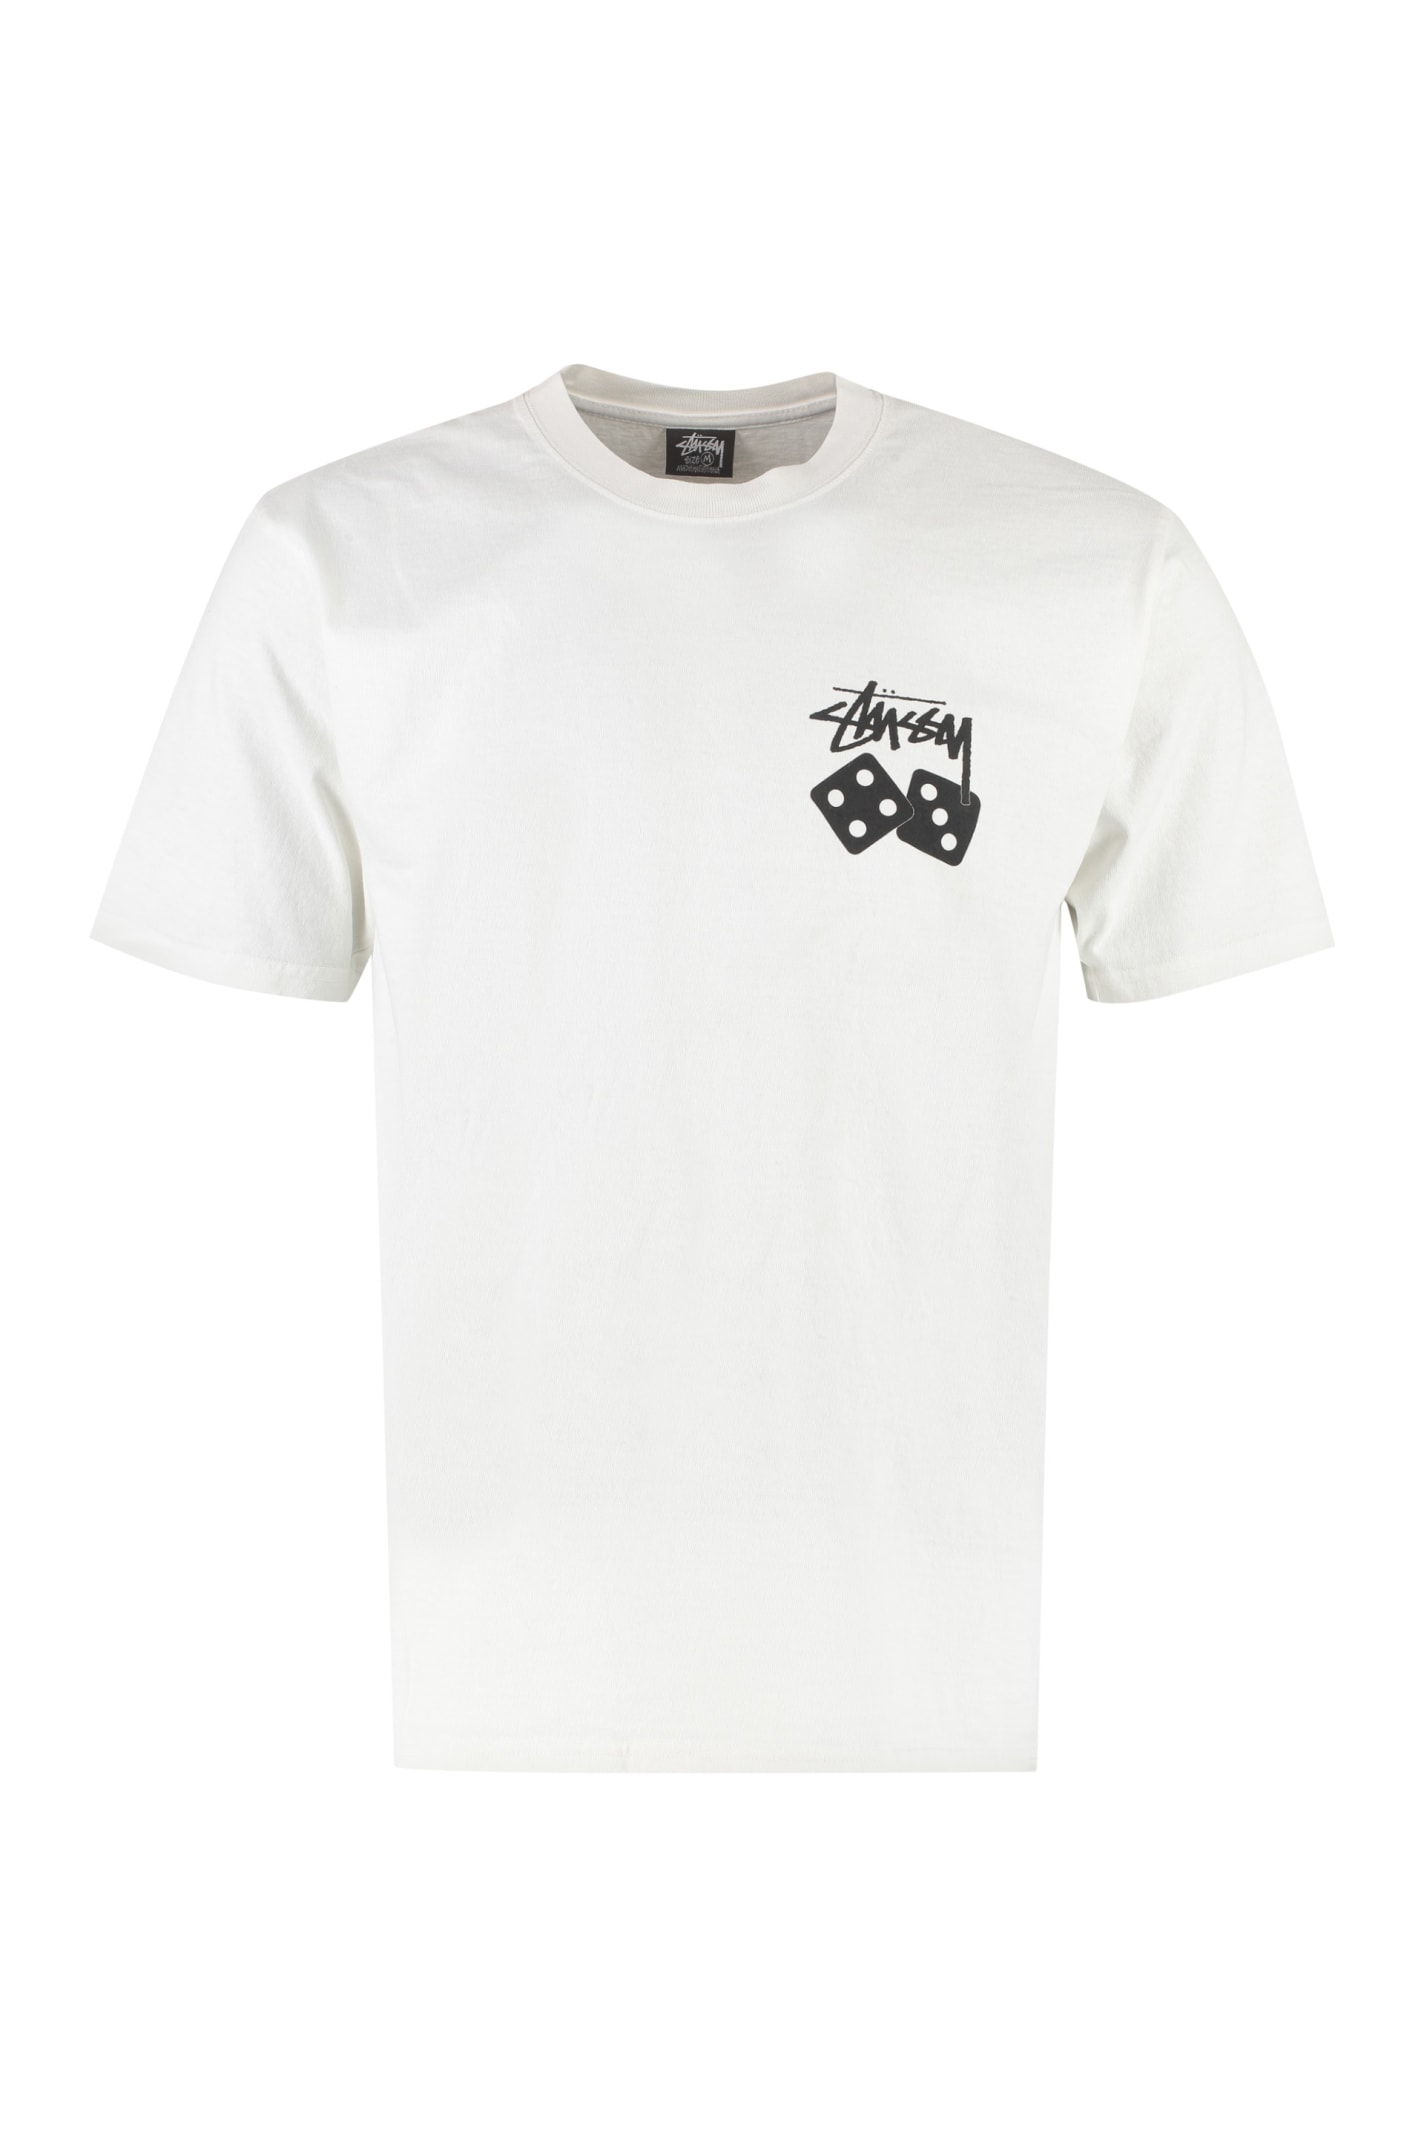 Stussy Short Sleeve Printed Cotton T-shirt